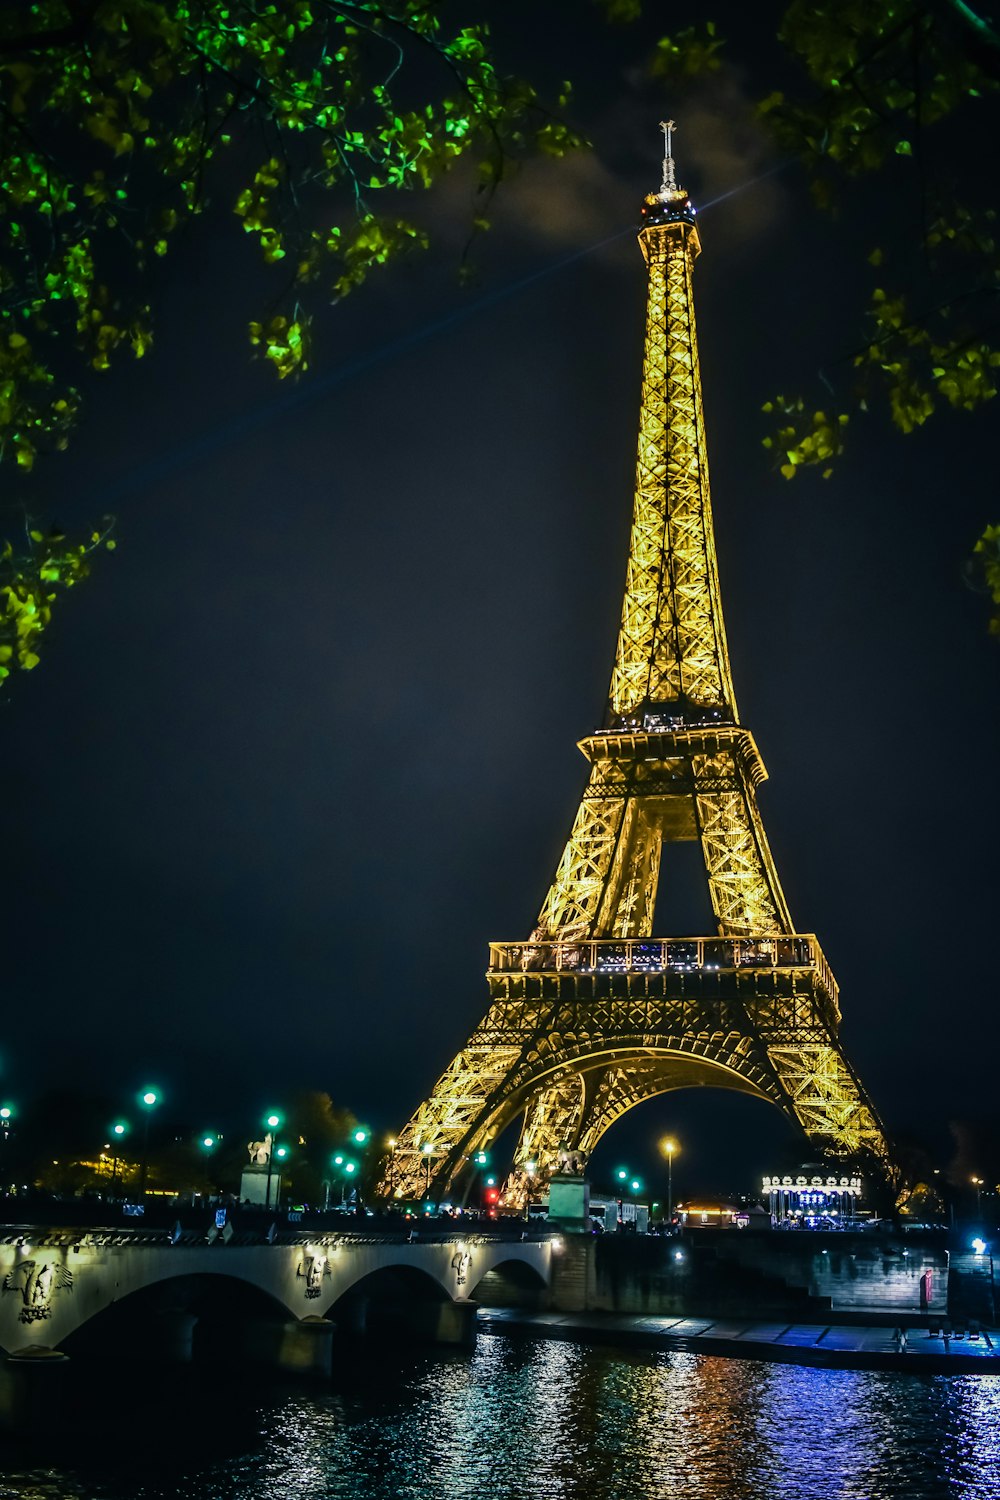 Eiffel Tower Photo Free Architecture Image On Unsplash